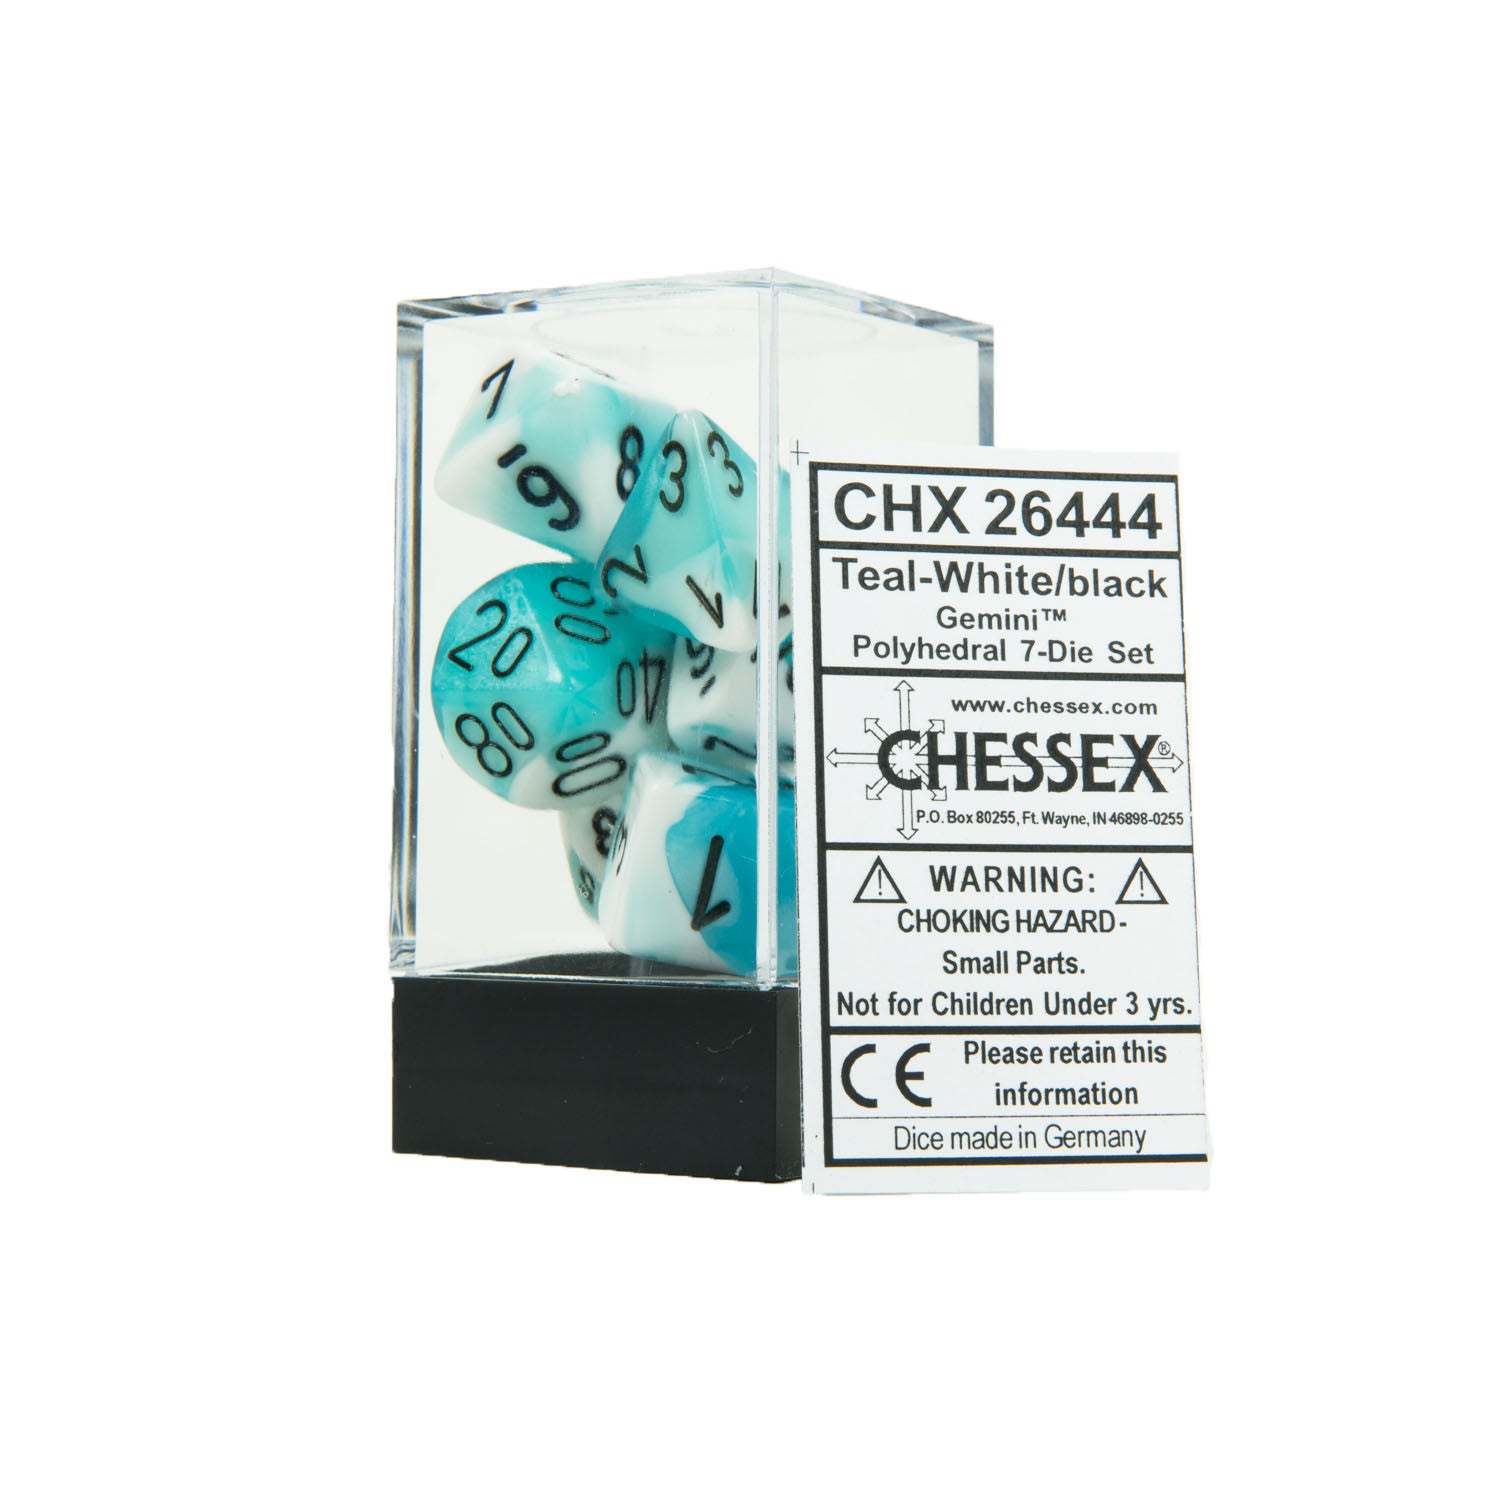 Chessex CHX26444 Teal-White w/black Gemini™ Polyhedral Dice Set